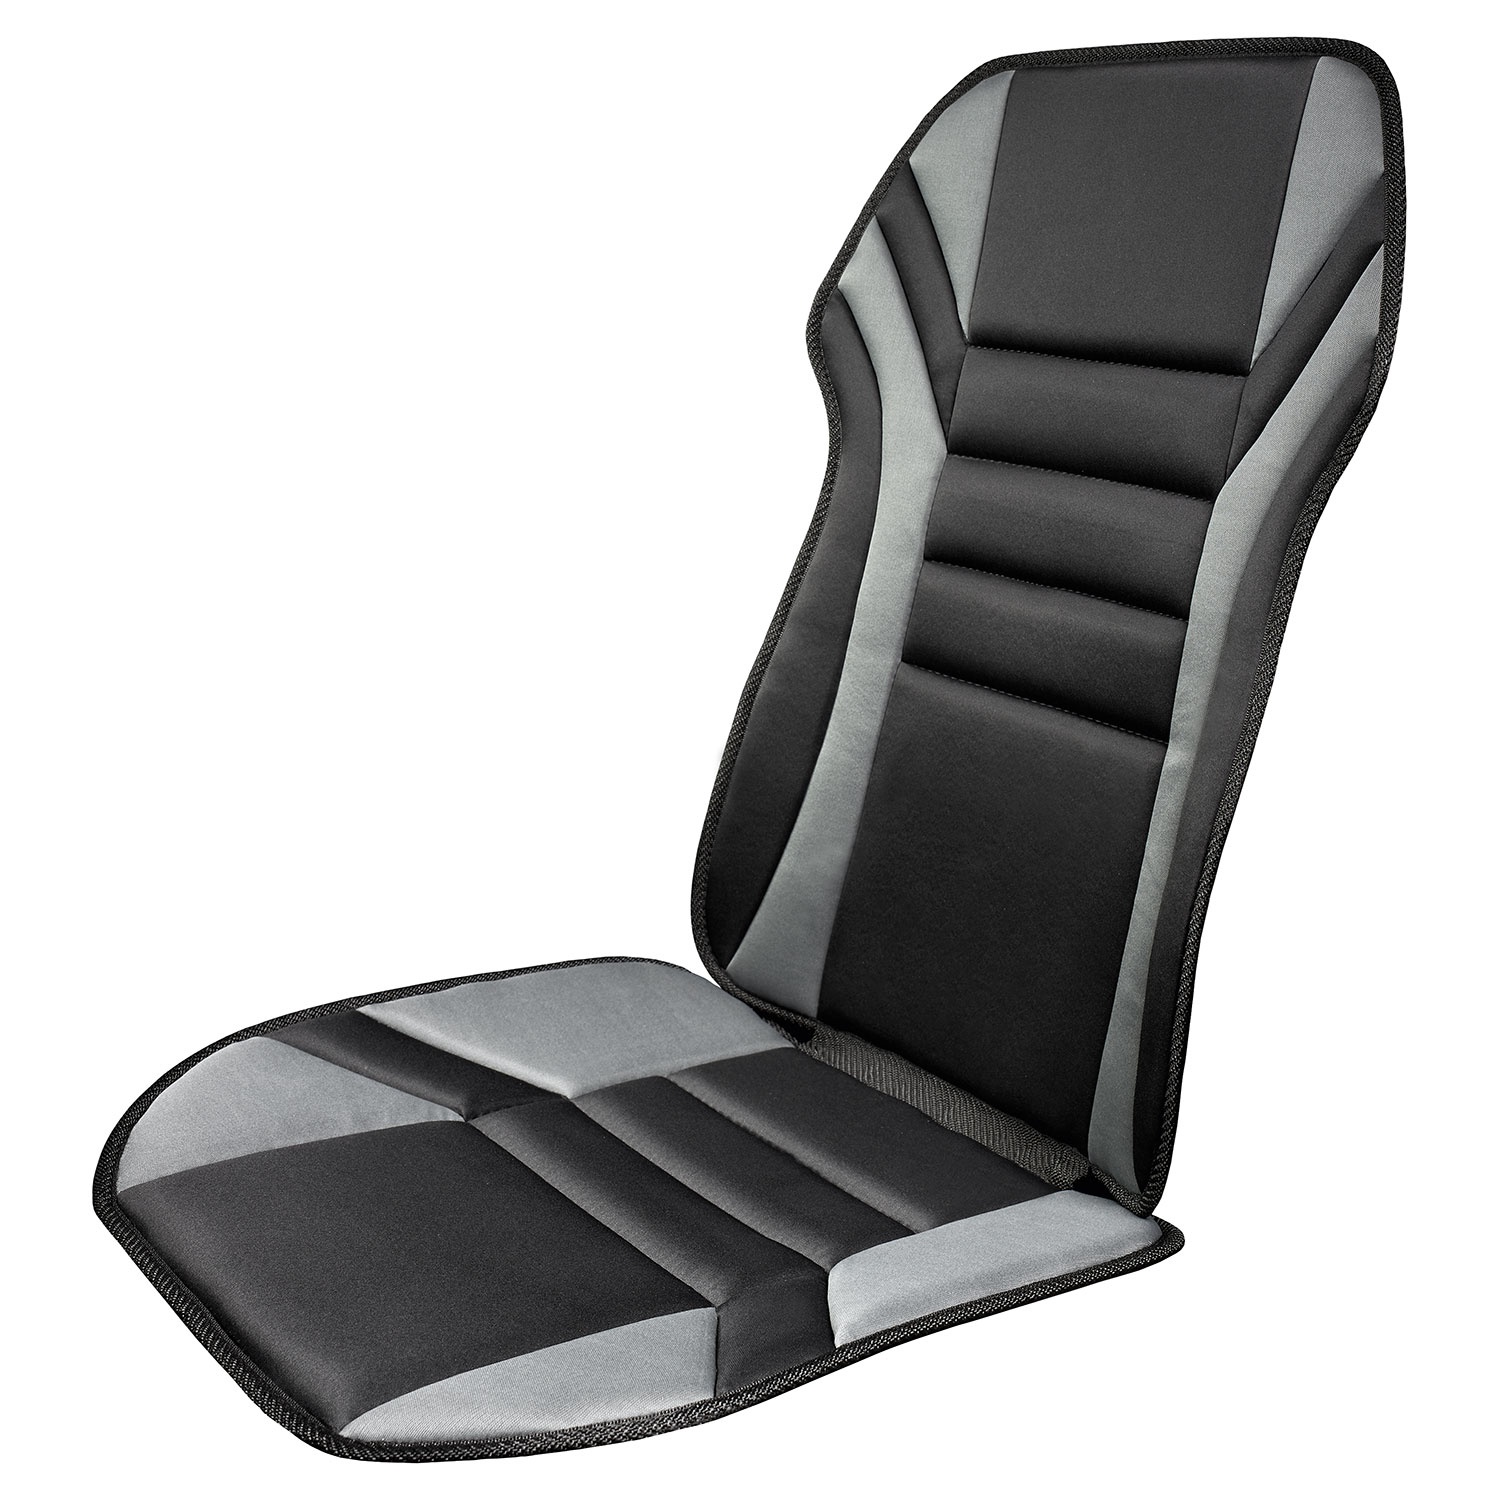 AUTO XS® Auto-Sitzaufleger